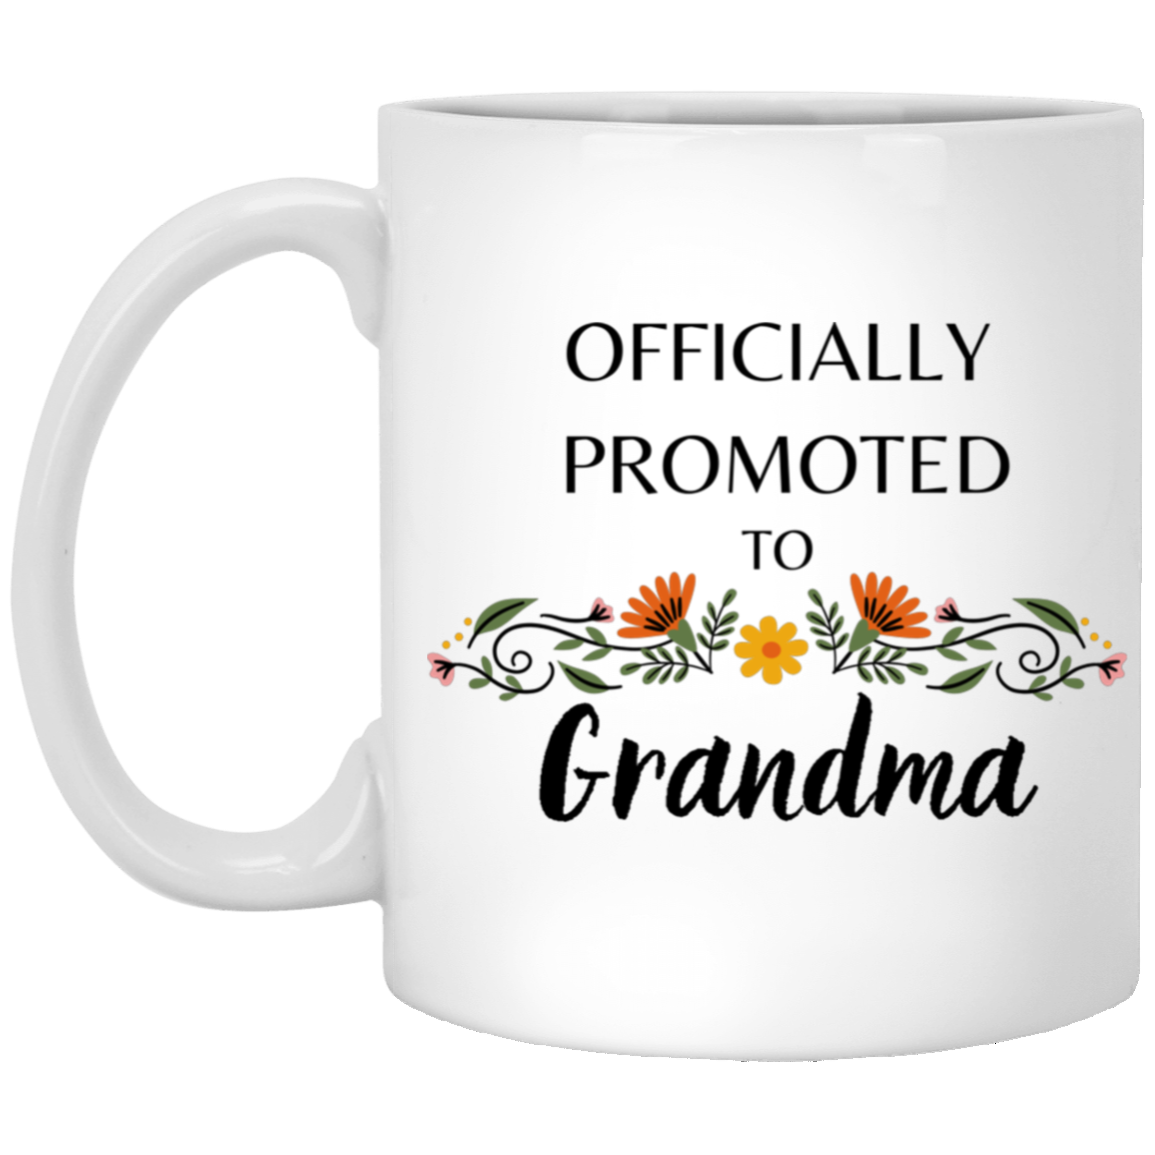 Officially Promoted To Grandma - 11oz White Mug